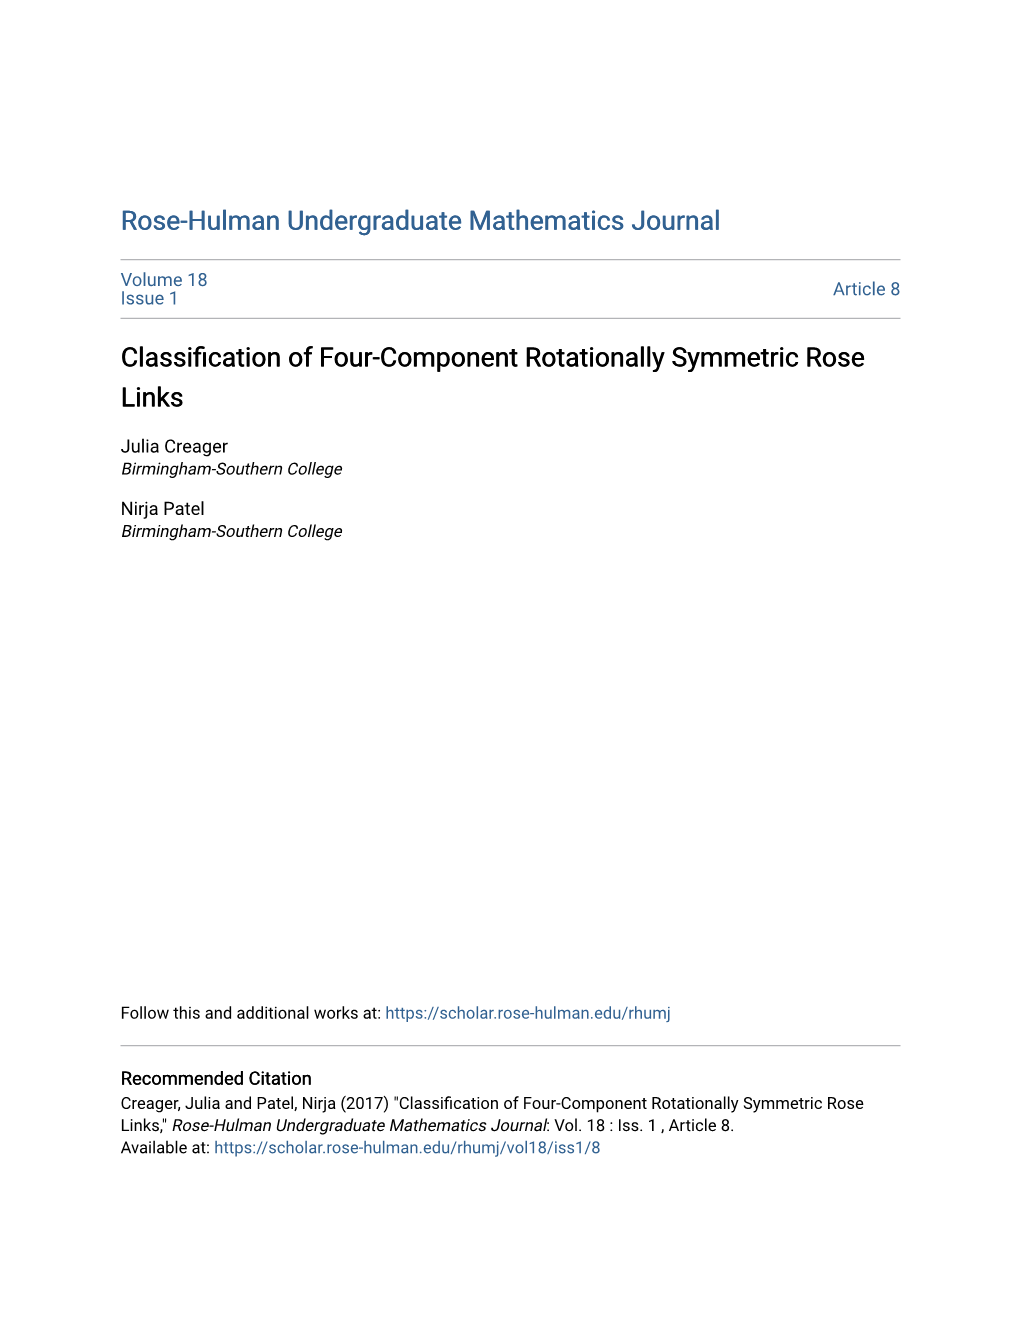 Classification of Four-Component Rotationally Symmetric Rose Links